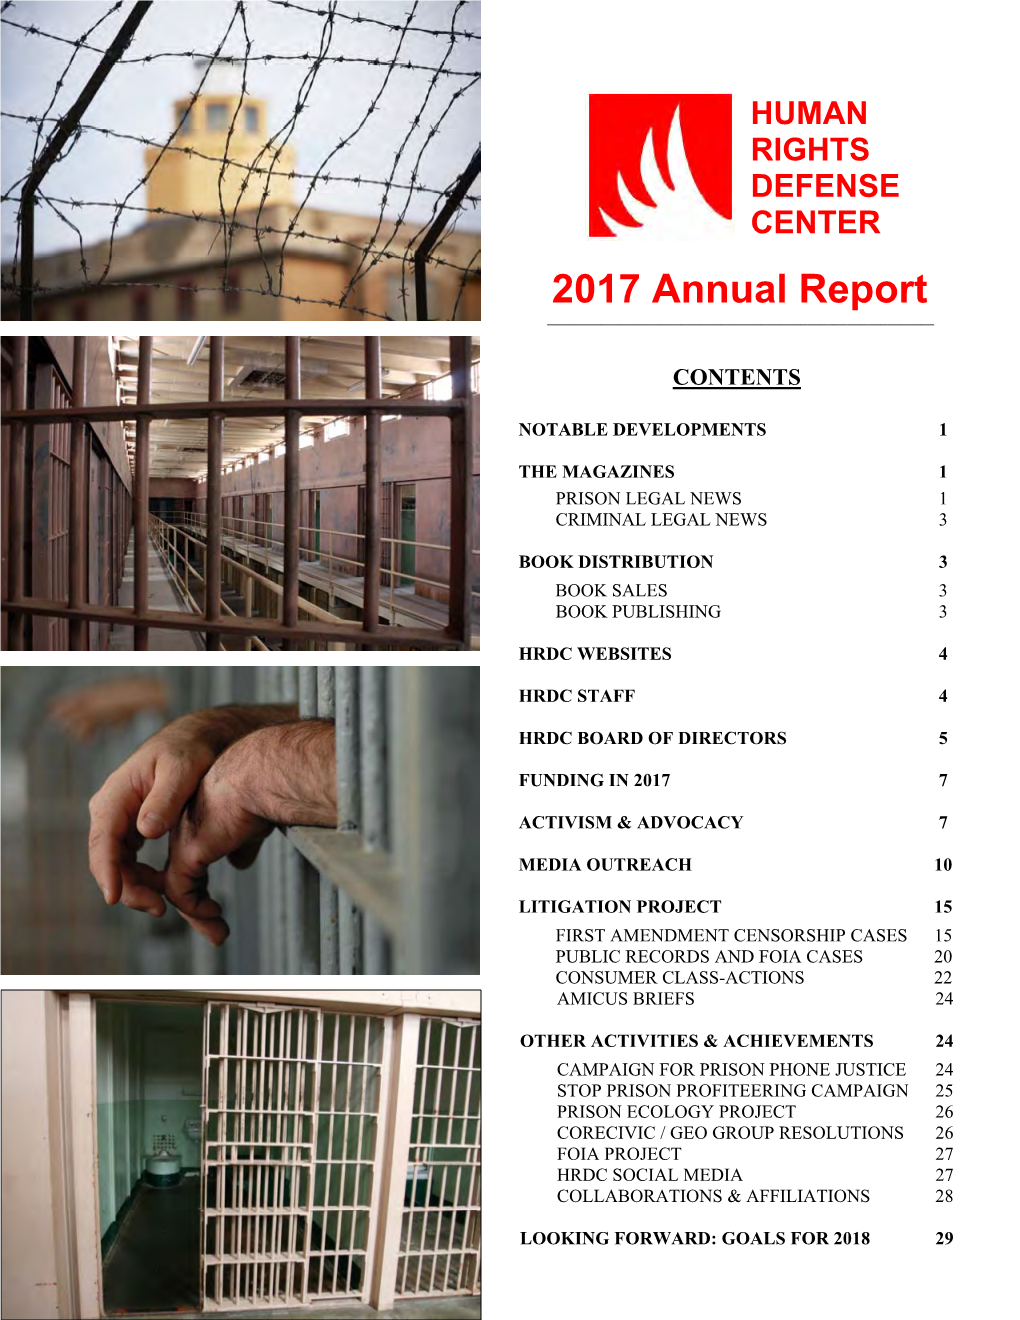 Human Rights Defense Center Annual Report 2017 [1]